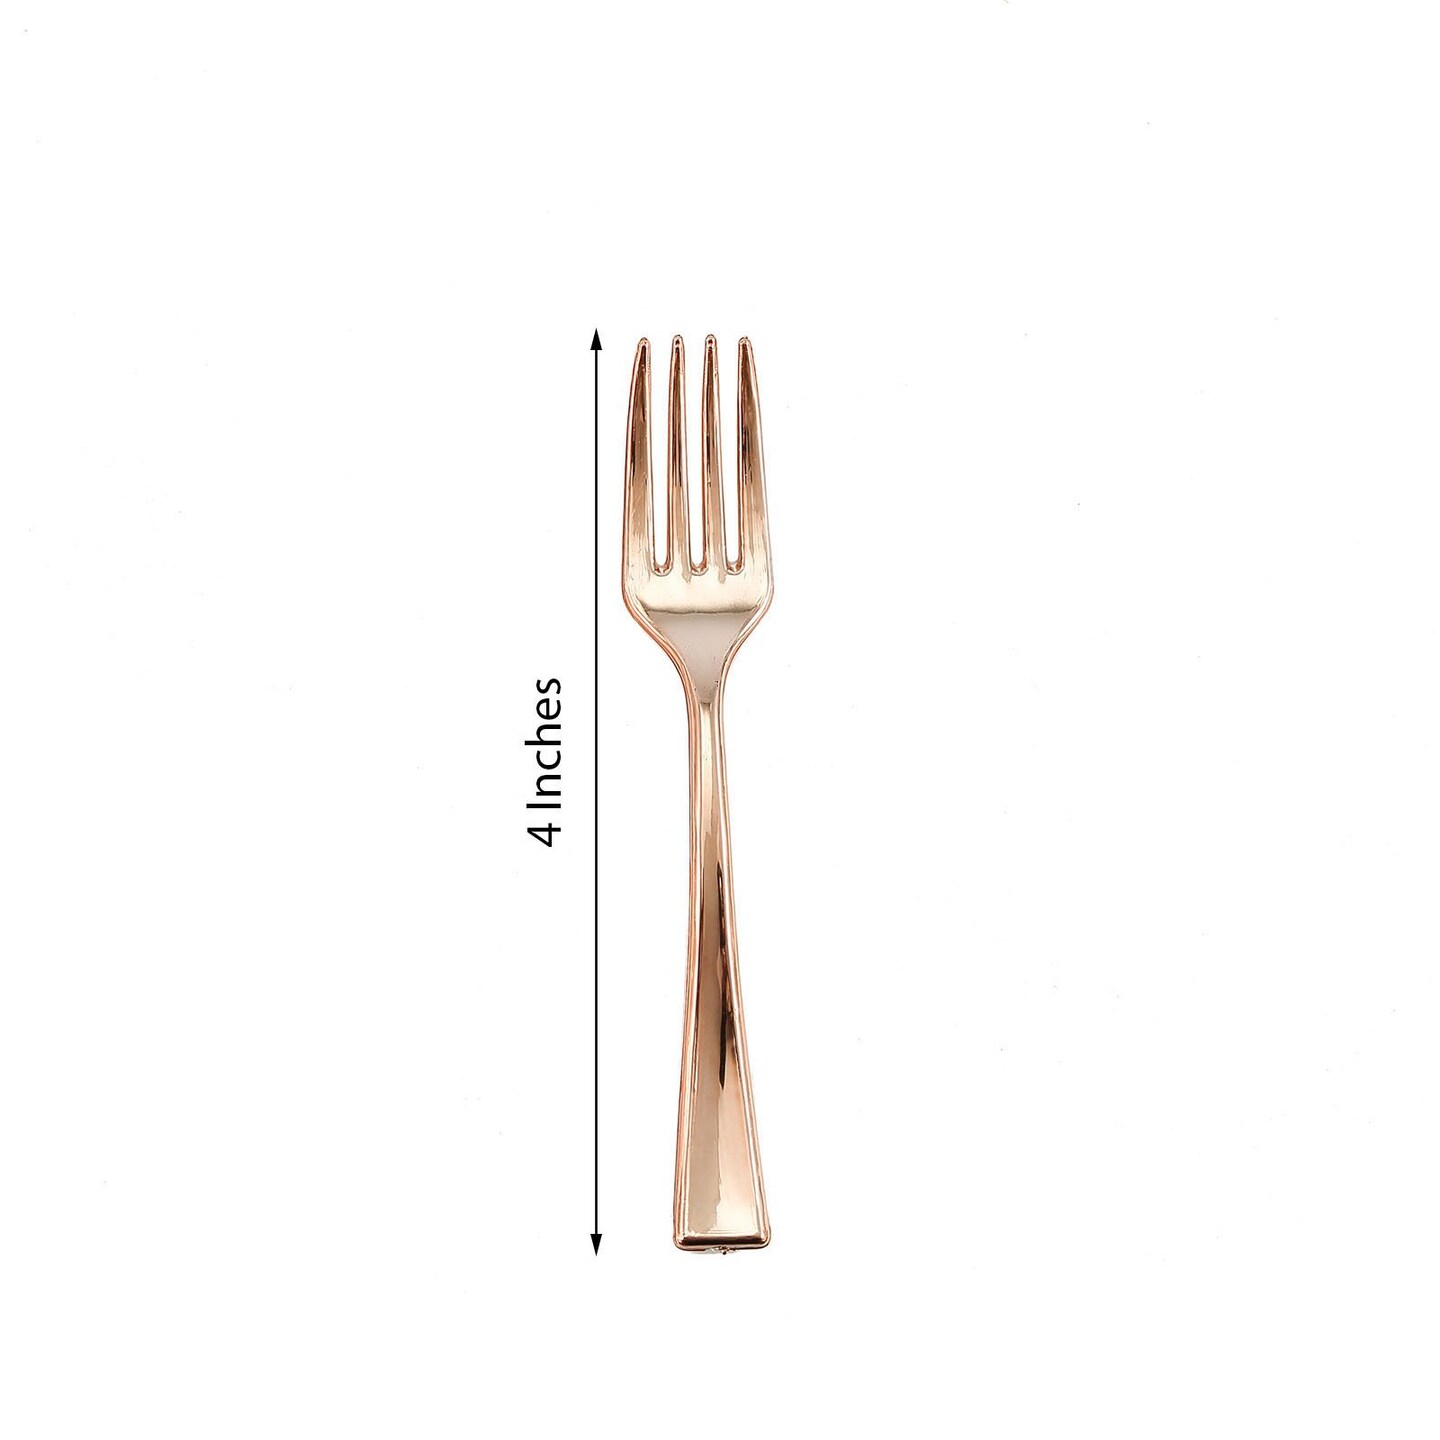 4-Inch long Rose Gold Disposable Plastic Appetizer Forks